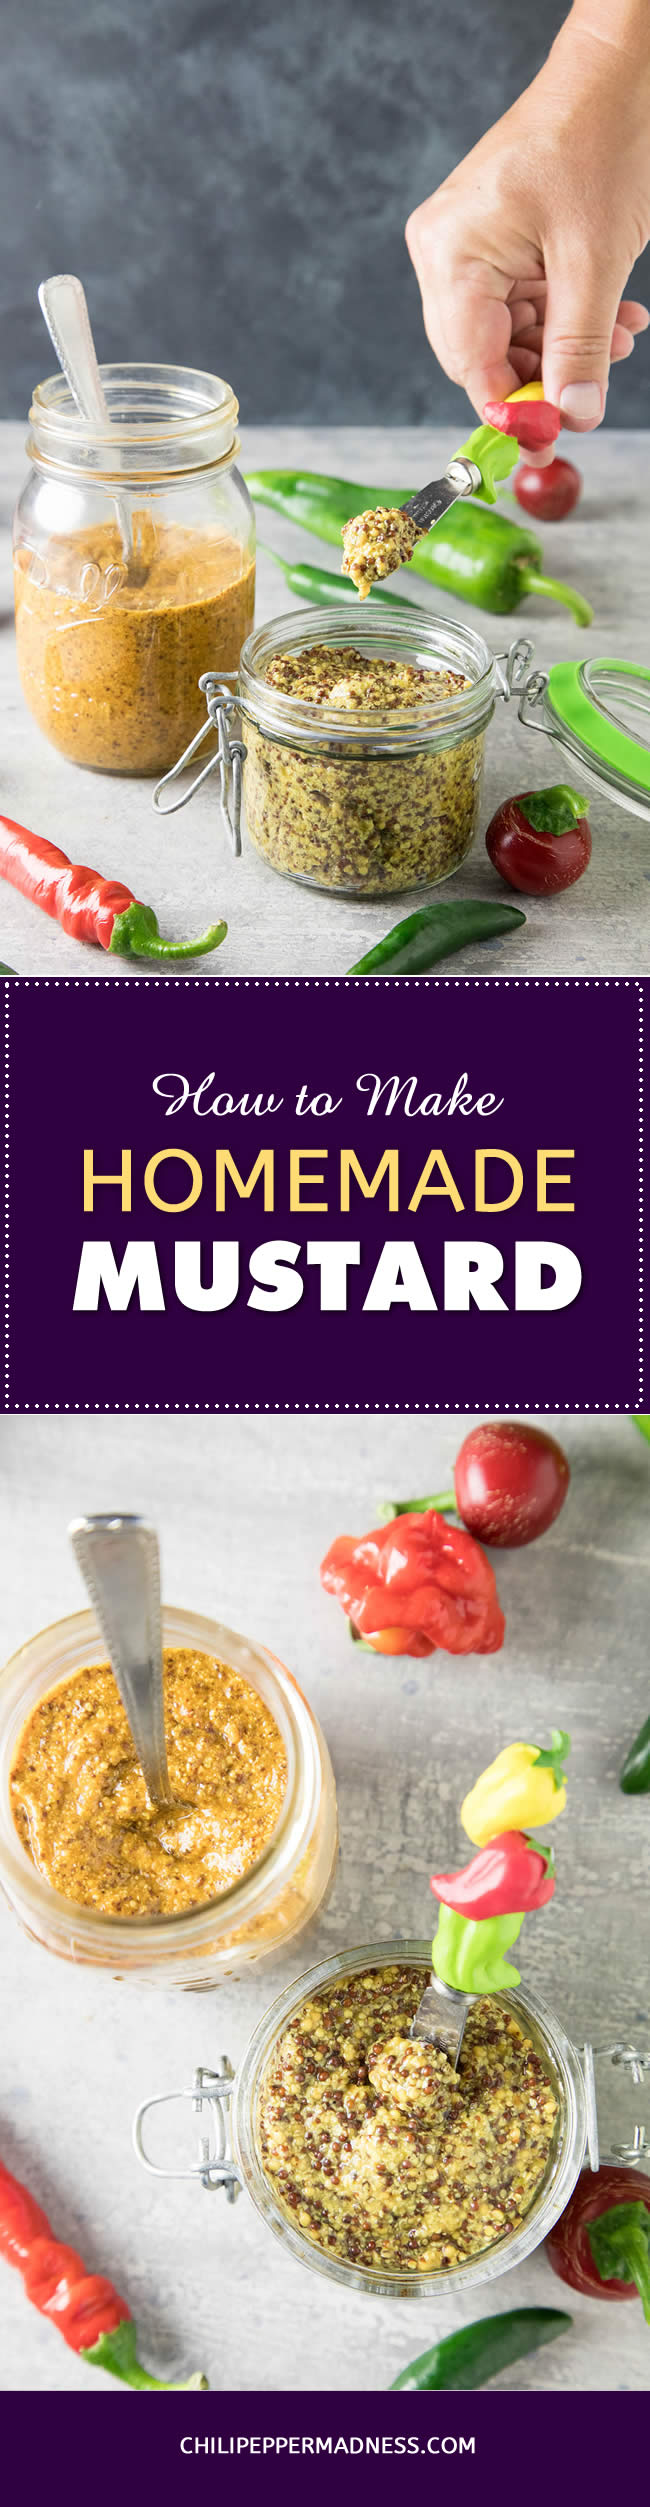 How to Make Homemade Mustard – the Basics - Recipe